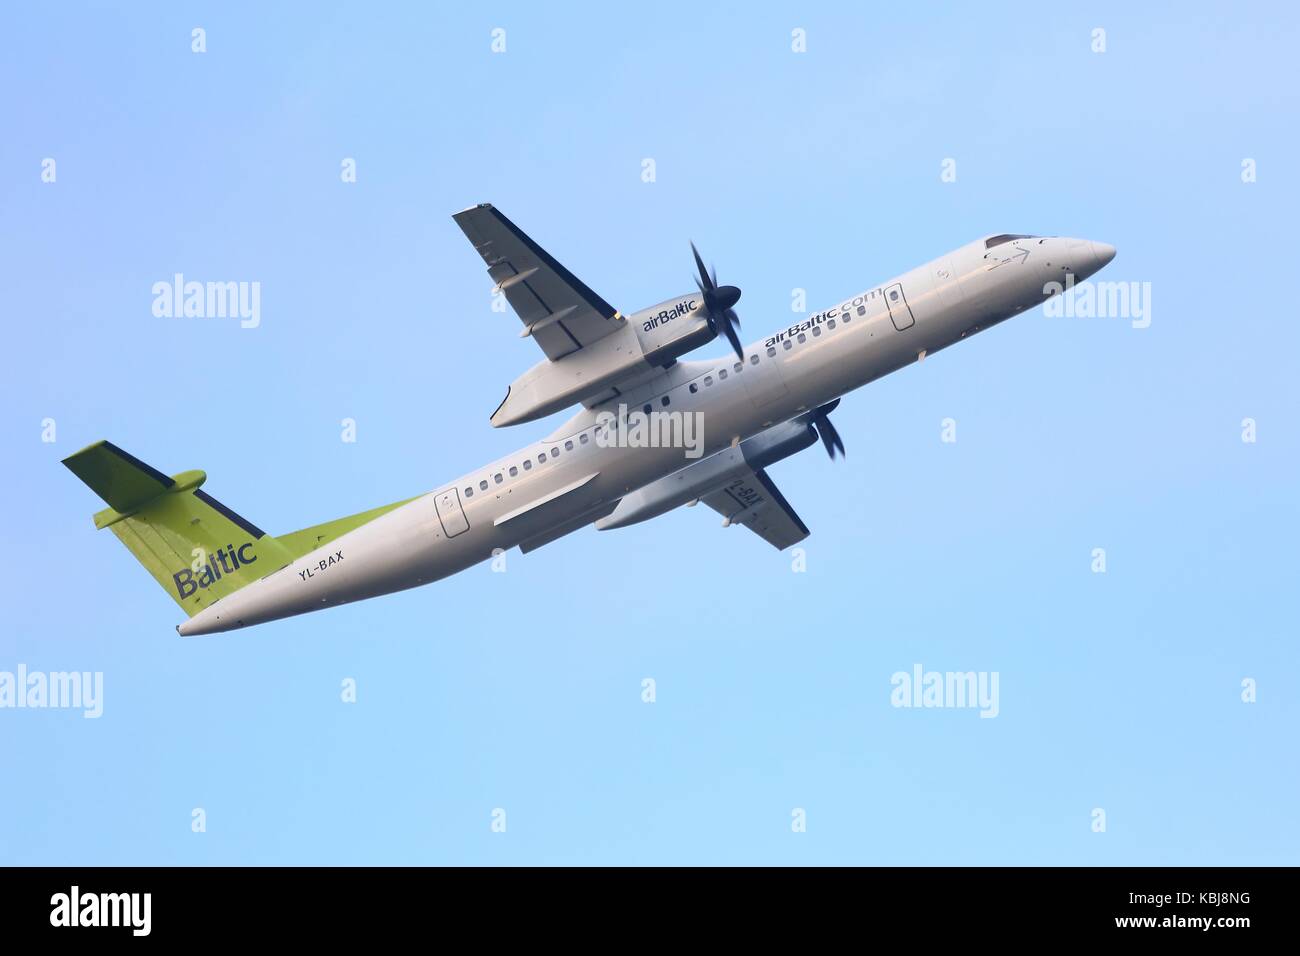 Plane taking off Stock Photo